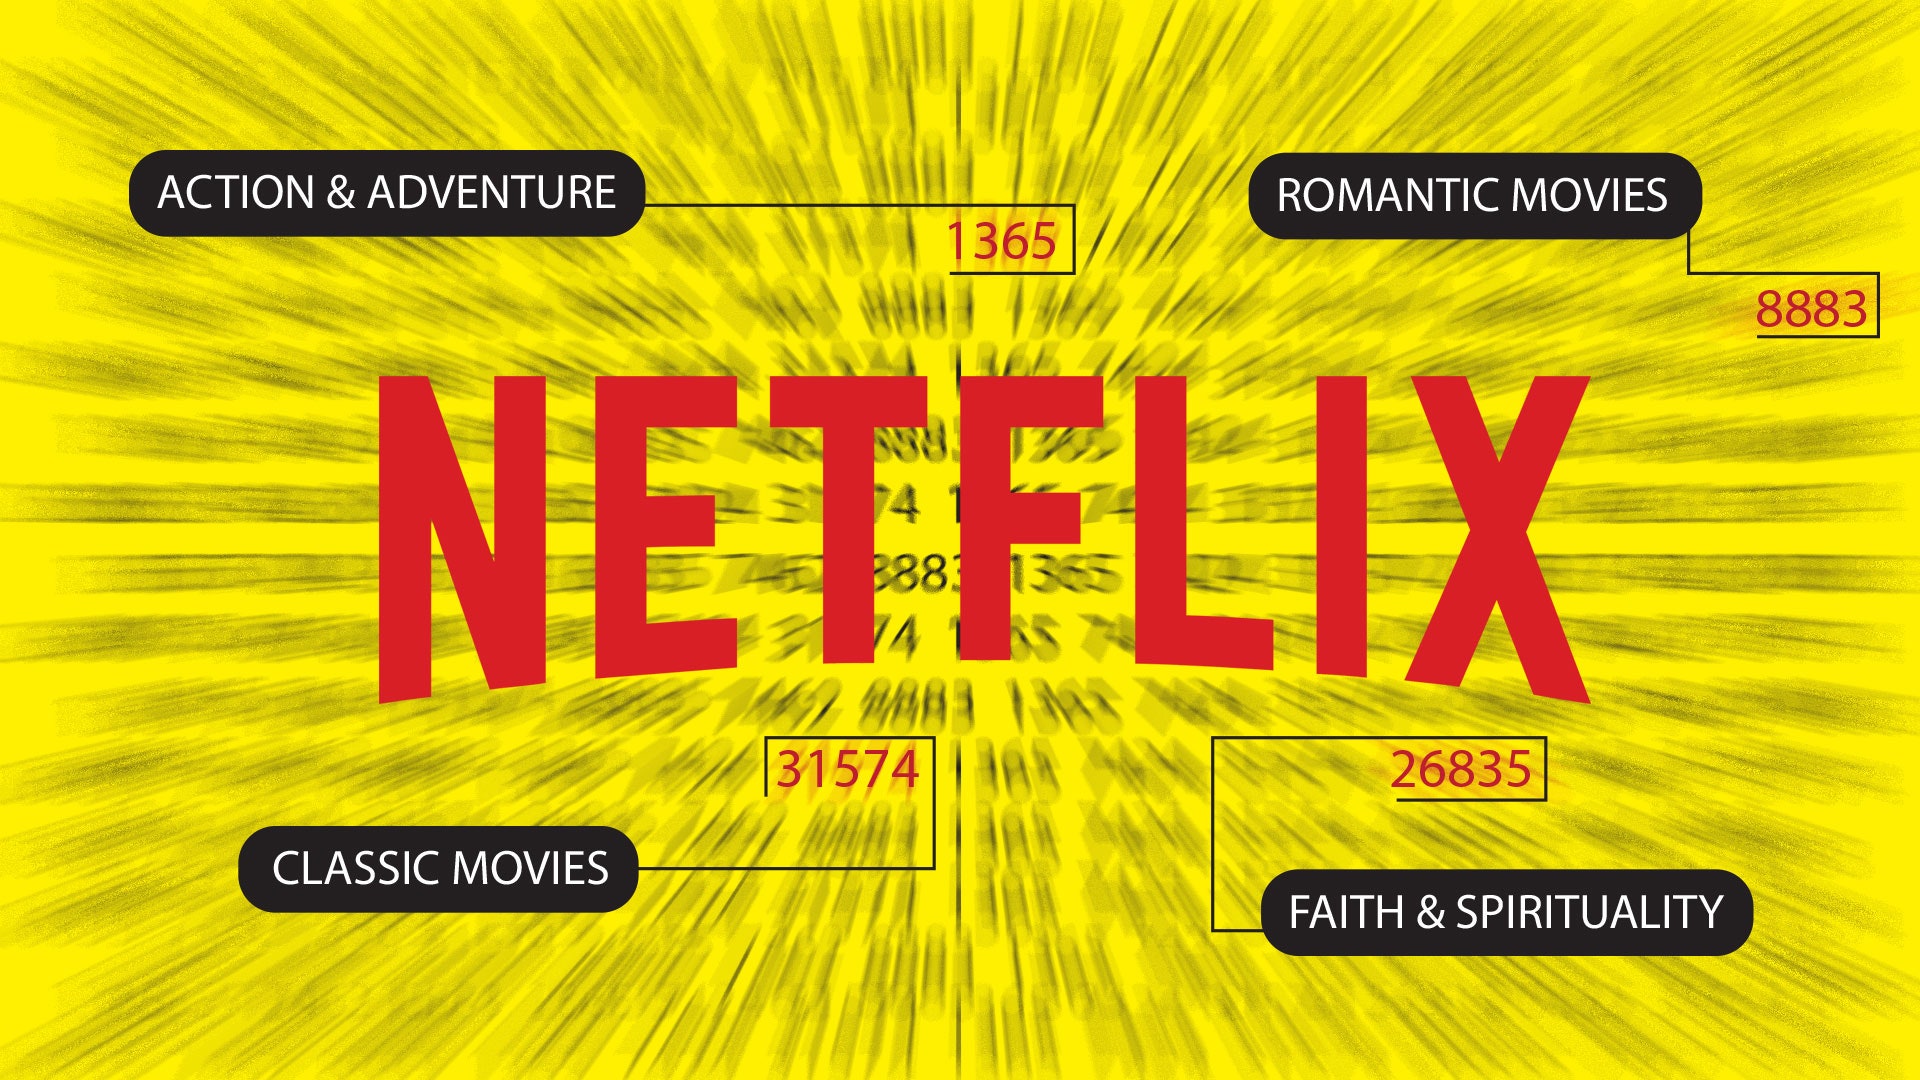 Netflix Work It 2020 Wallpapers